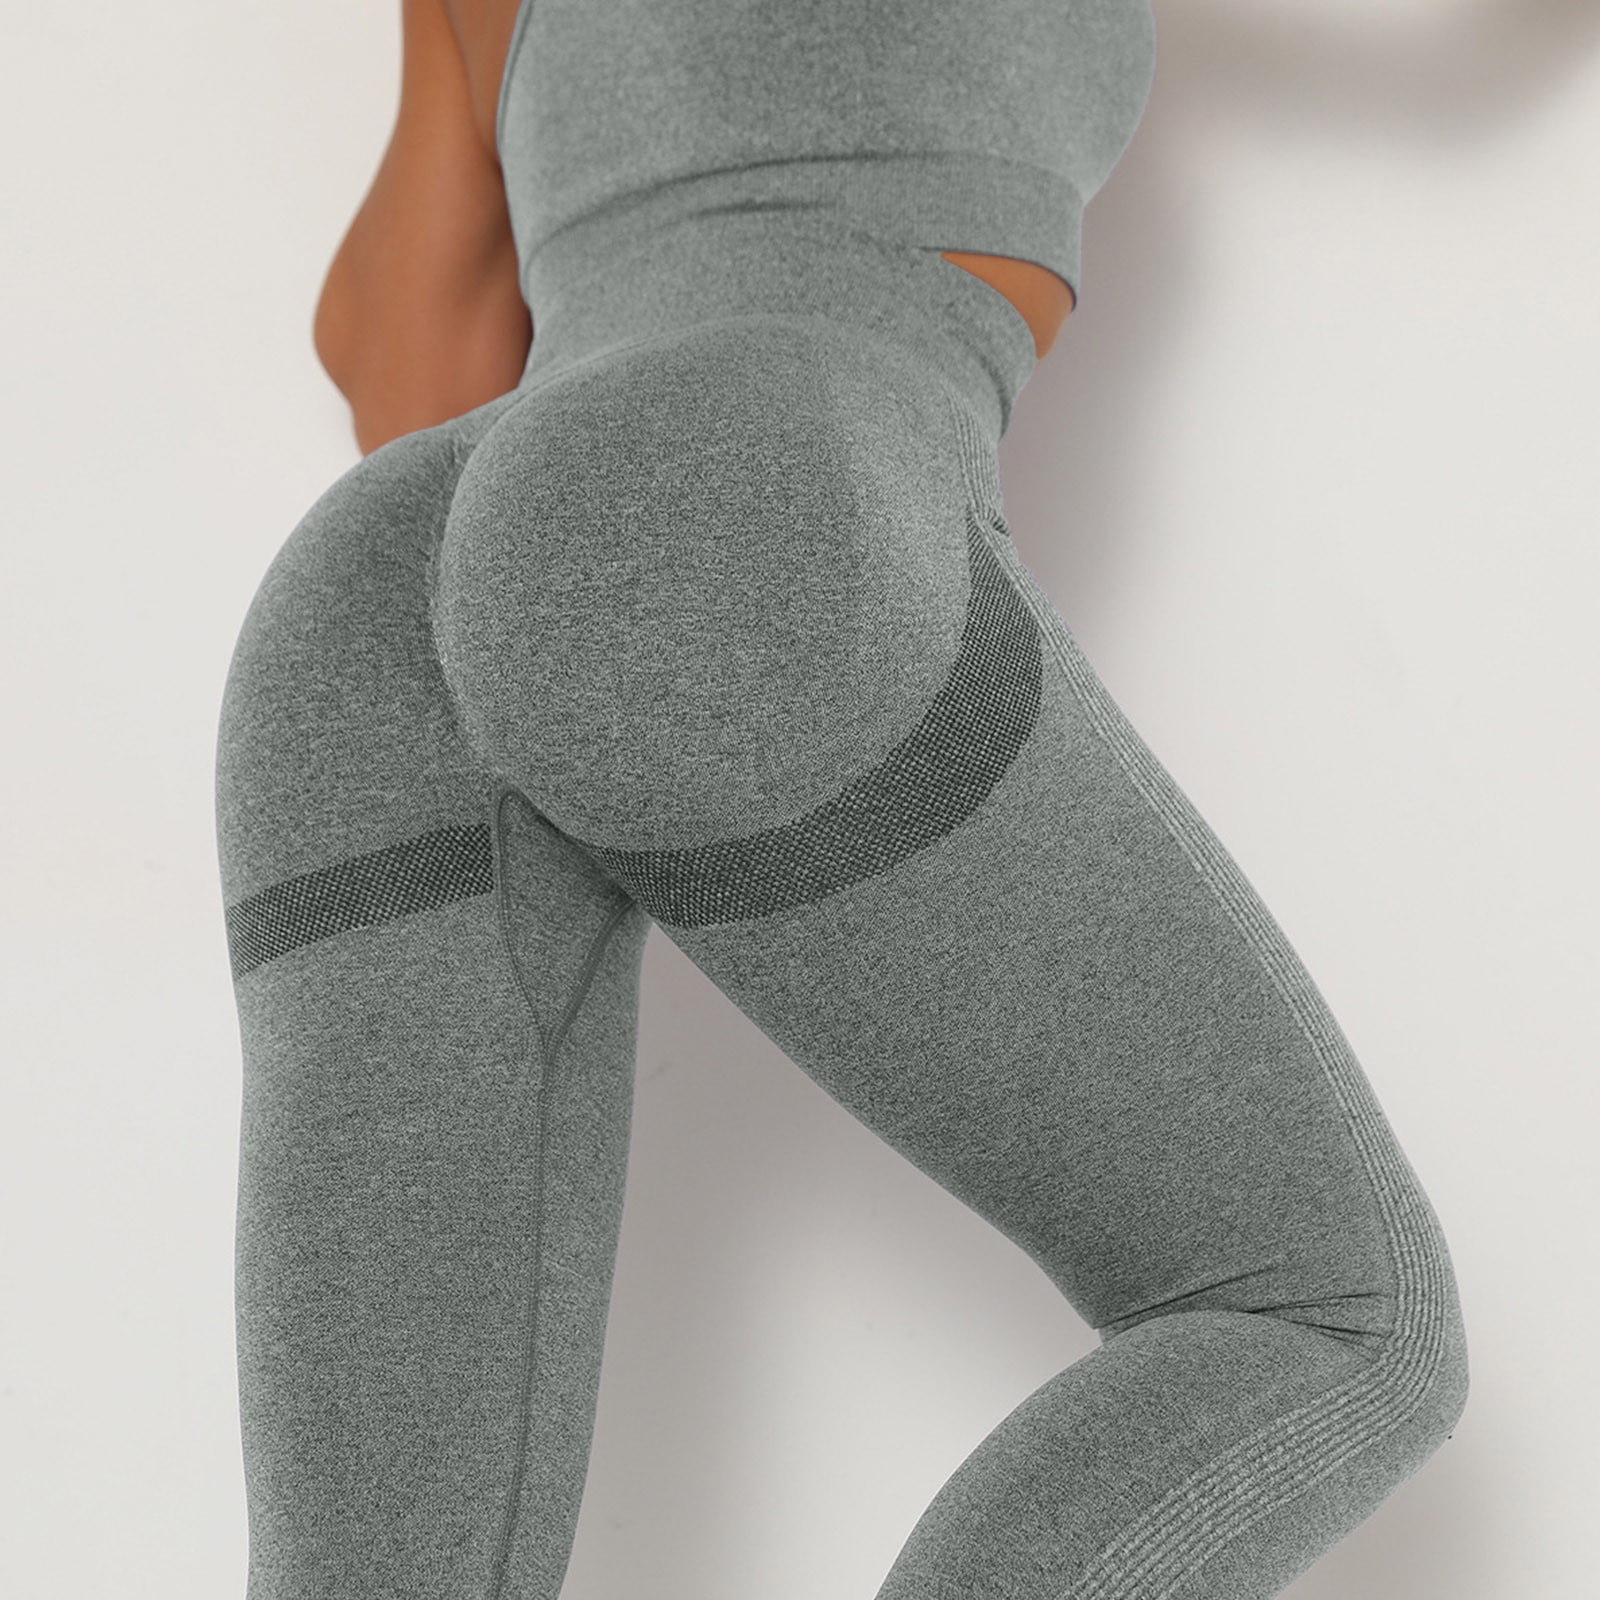 XFLWAM Scrunch Butt Lifting Workout Leggings for Women Seamless High  Waisted Smile Contour Yoga Pants Blue M